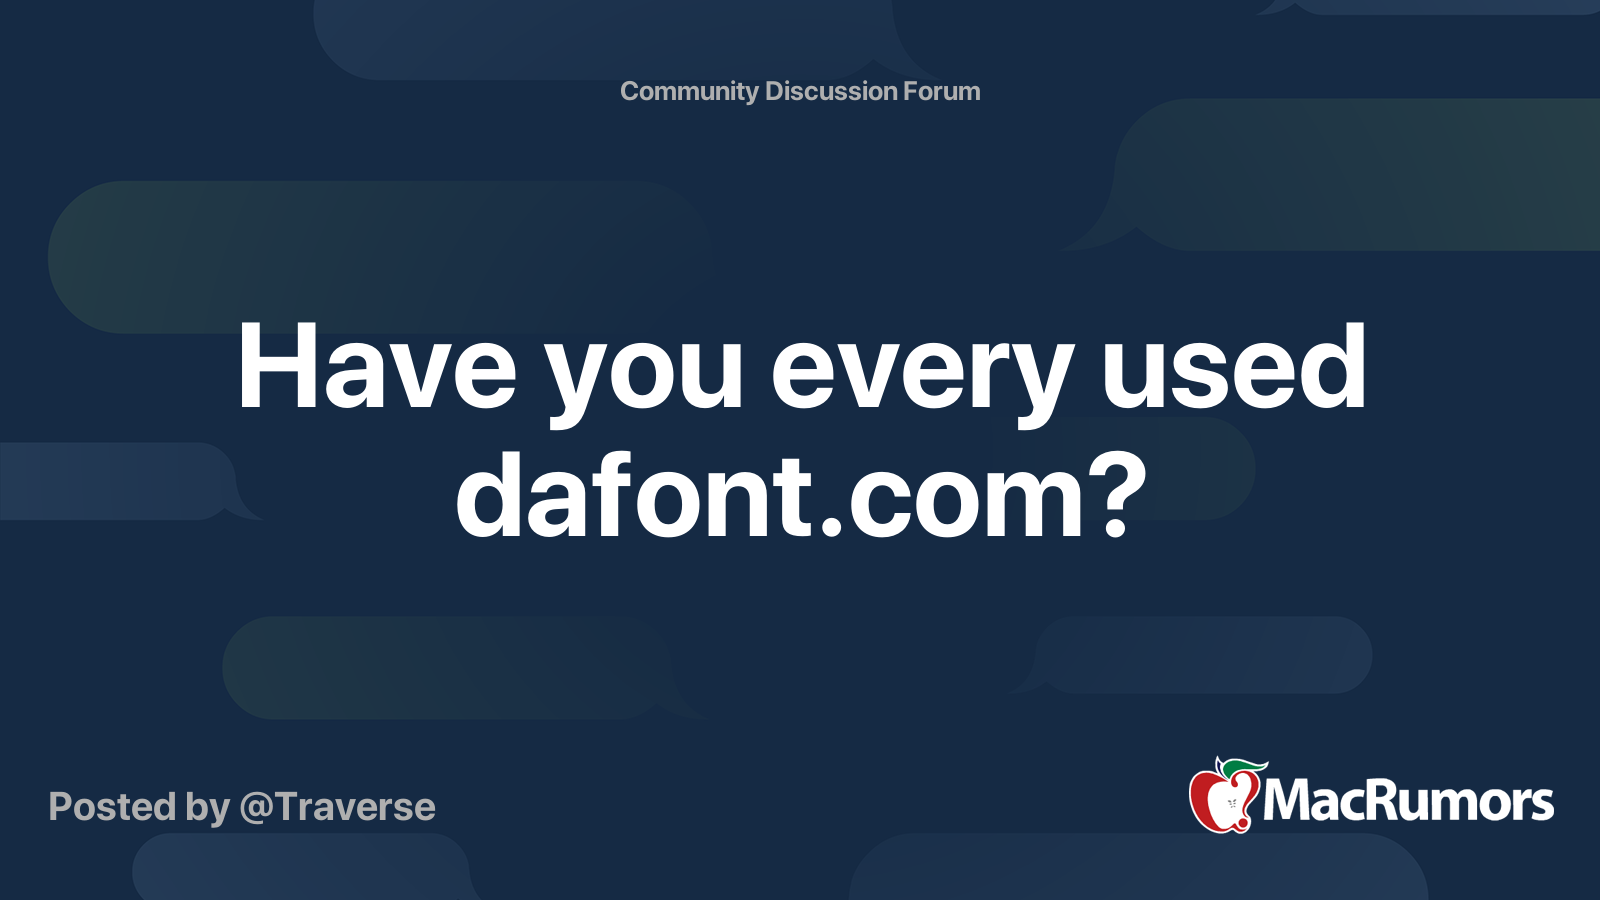 DaFont Reviews - 19 Reviews of Dafont.com